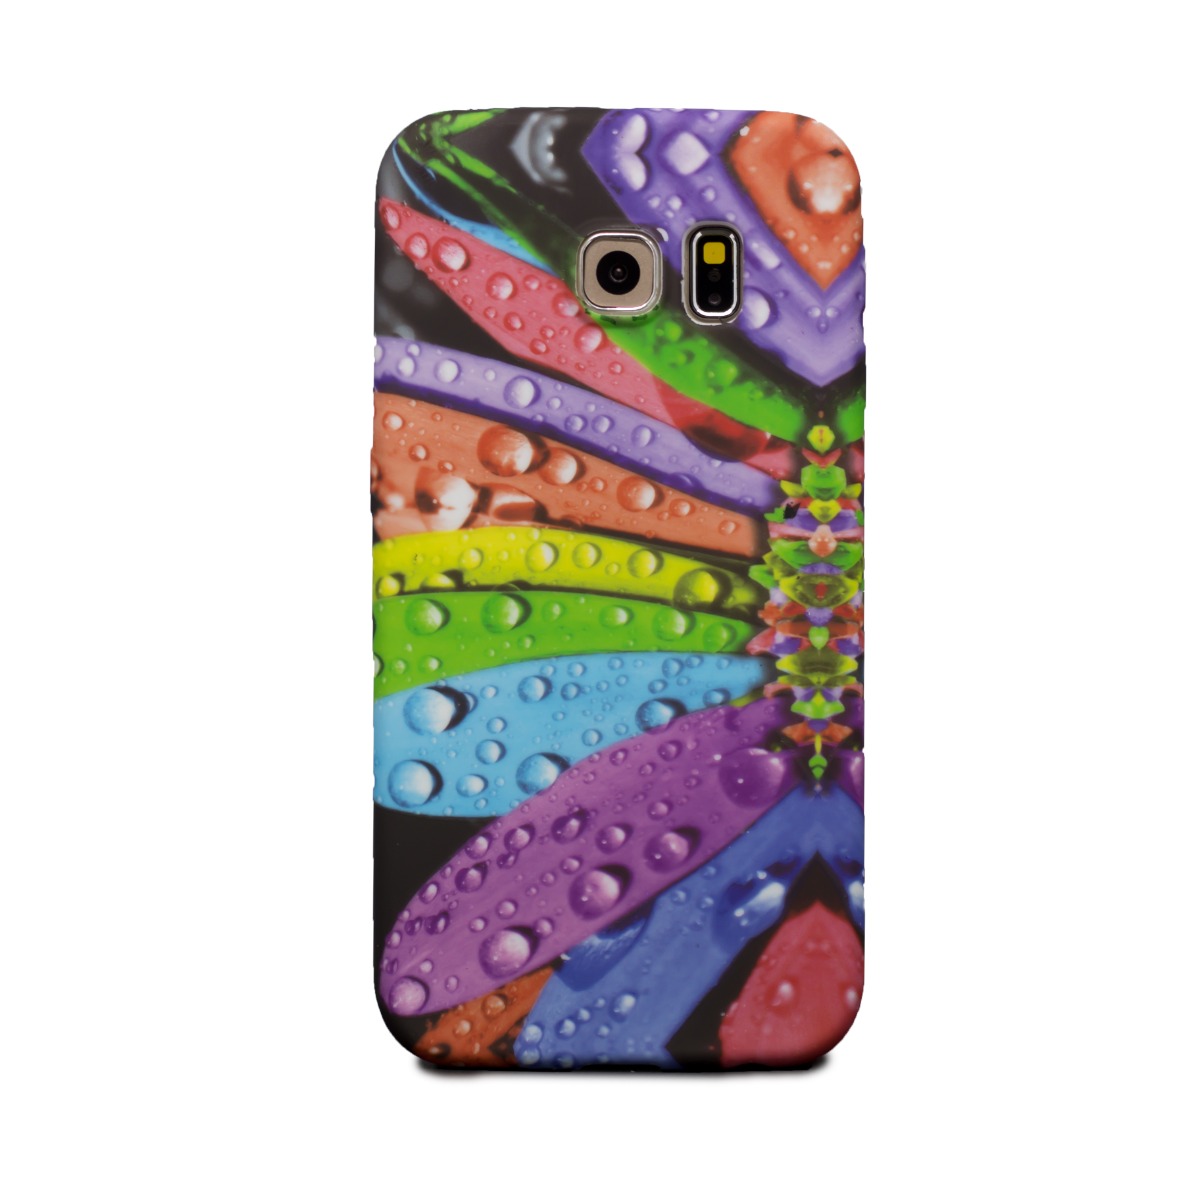 Carcasa Fashion Samsung Galaxy S6 Edge, Rainbow Flower thumb